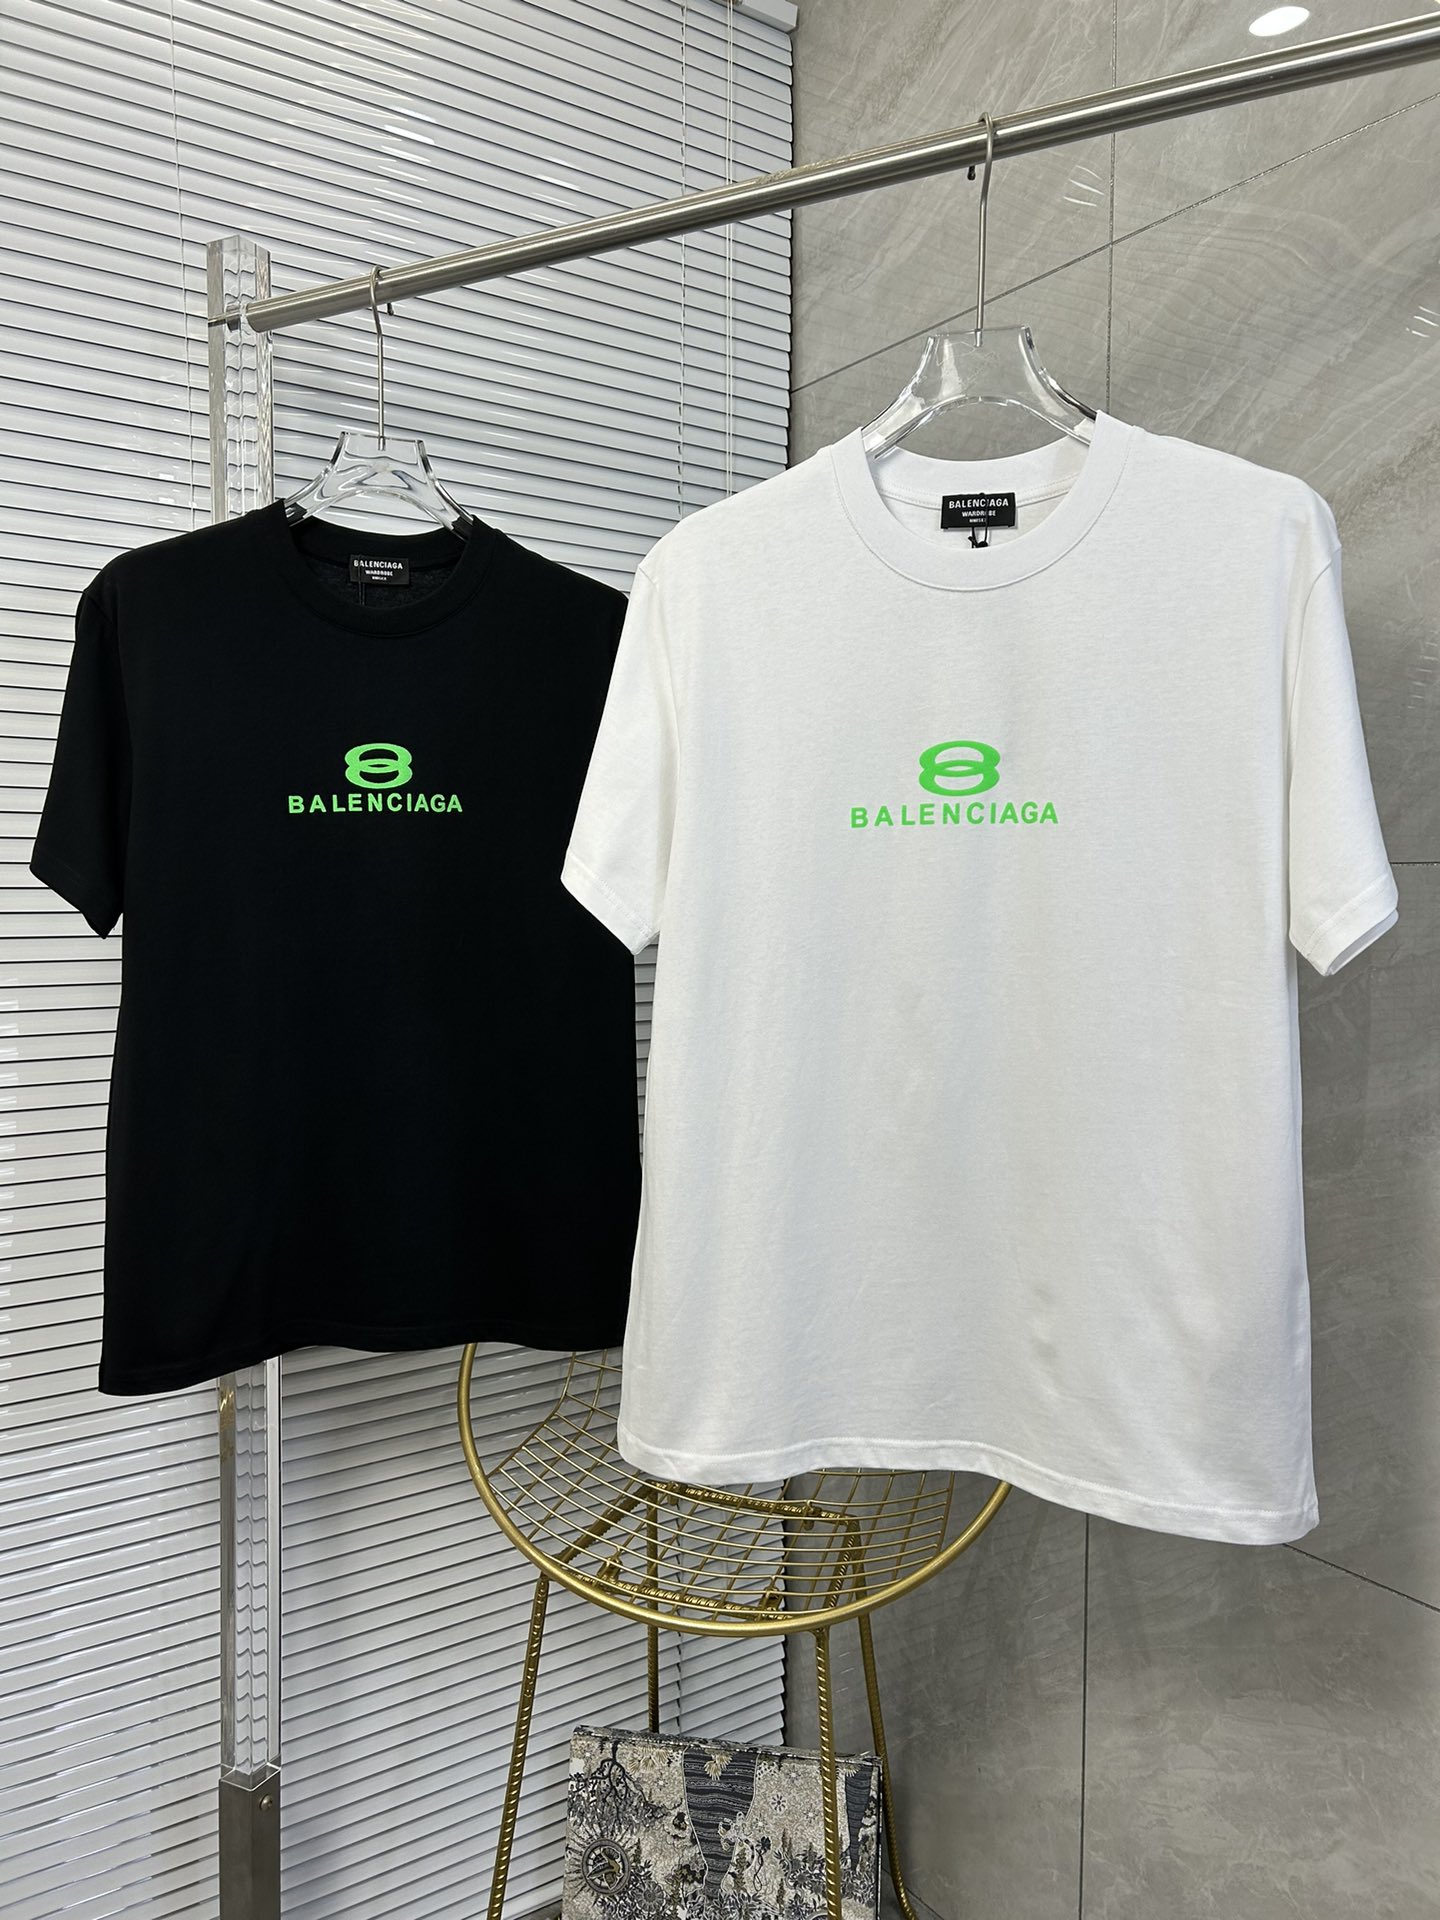 Online Sales
 Balenciaga Clothing T-Shirt Black White Printing Unisex Cotton Short Sleeve